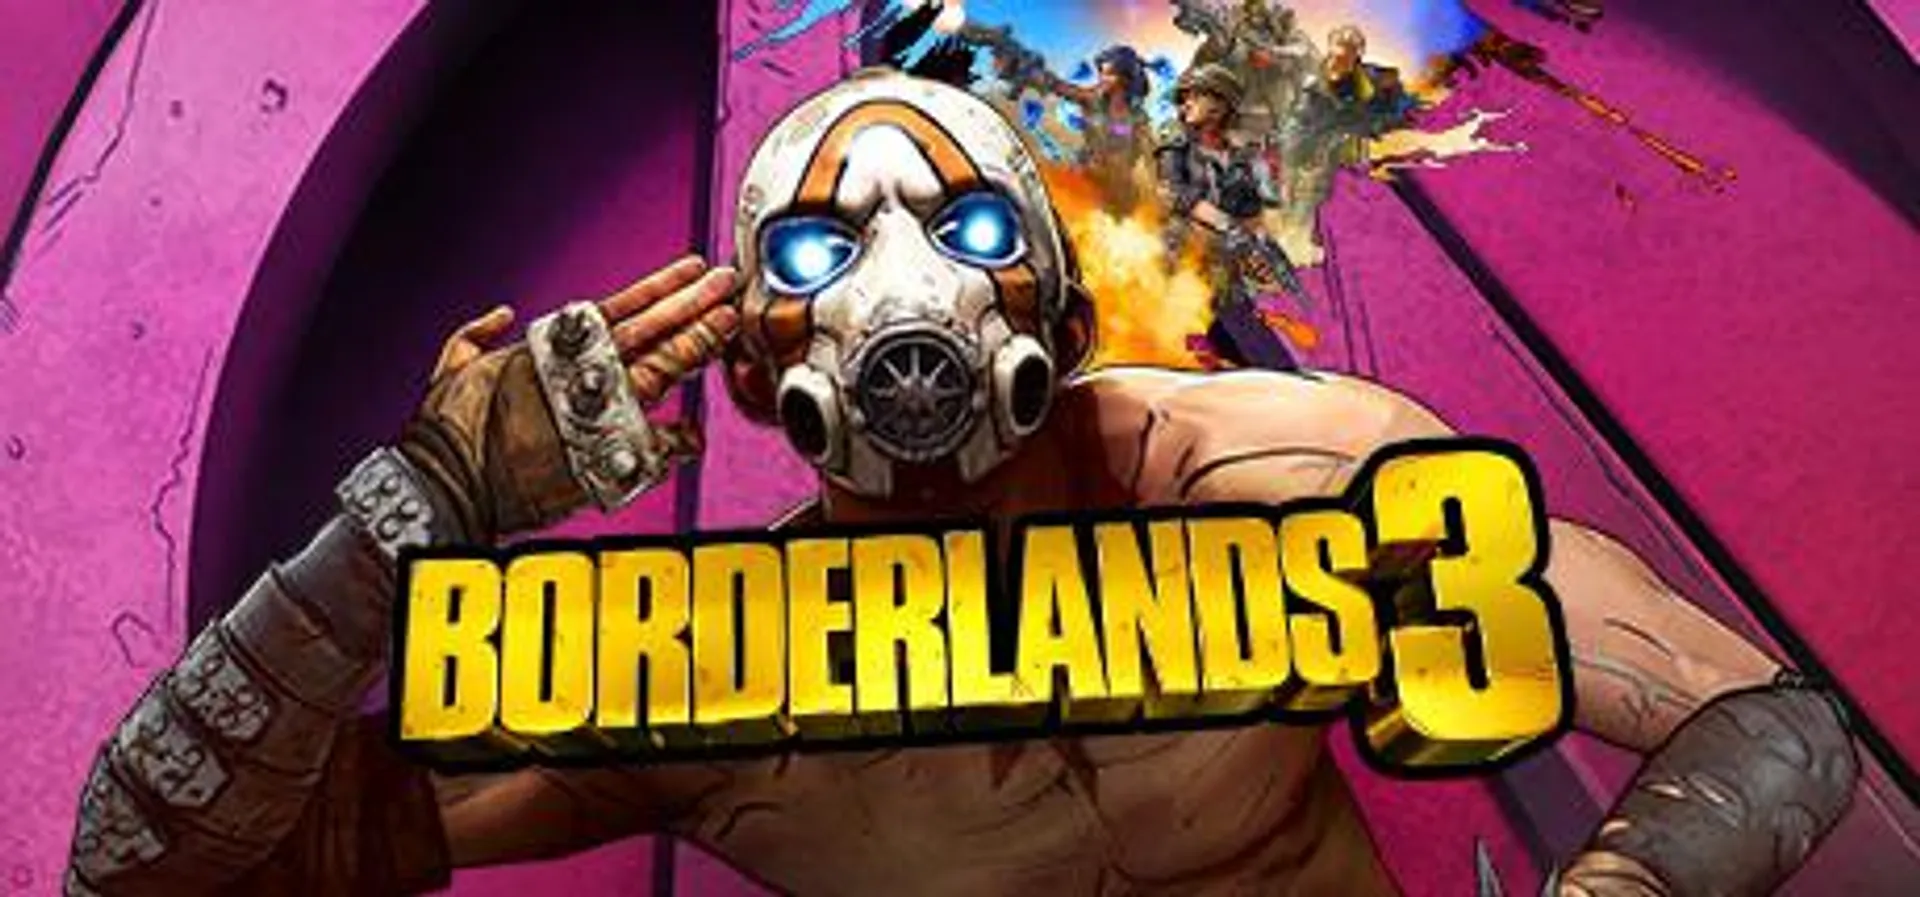 Save 85% on Borderlands 3 on Steam